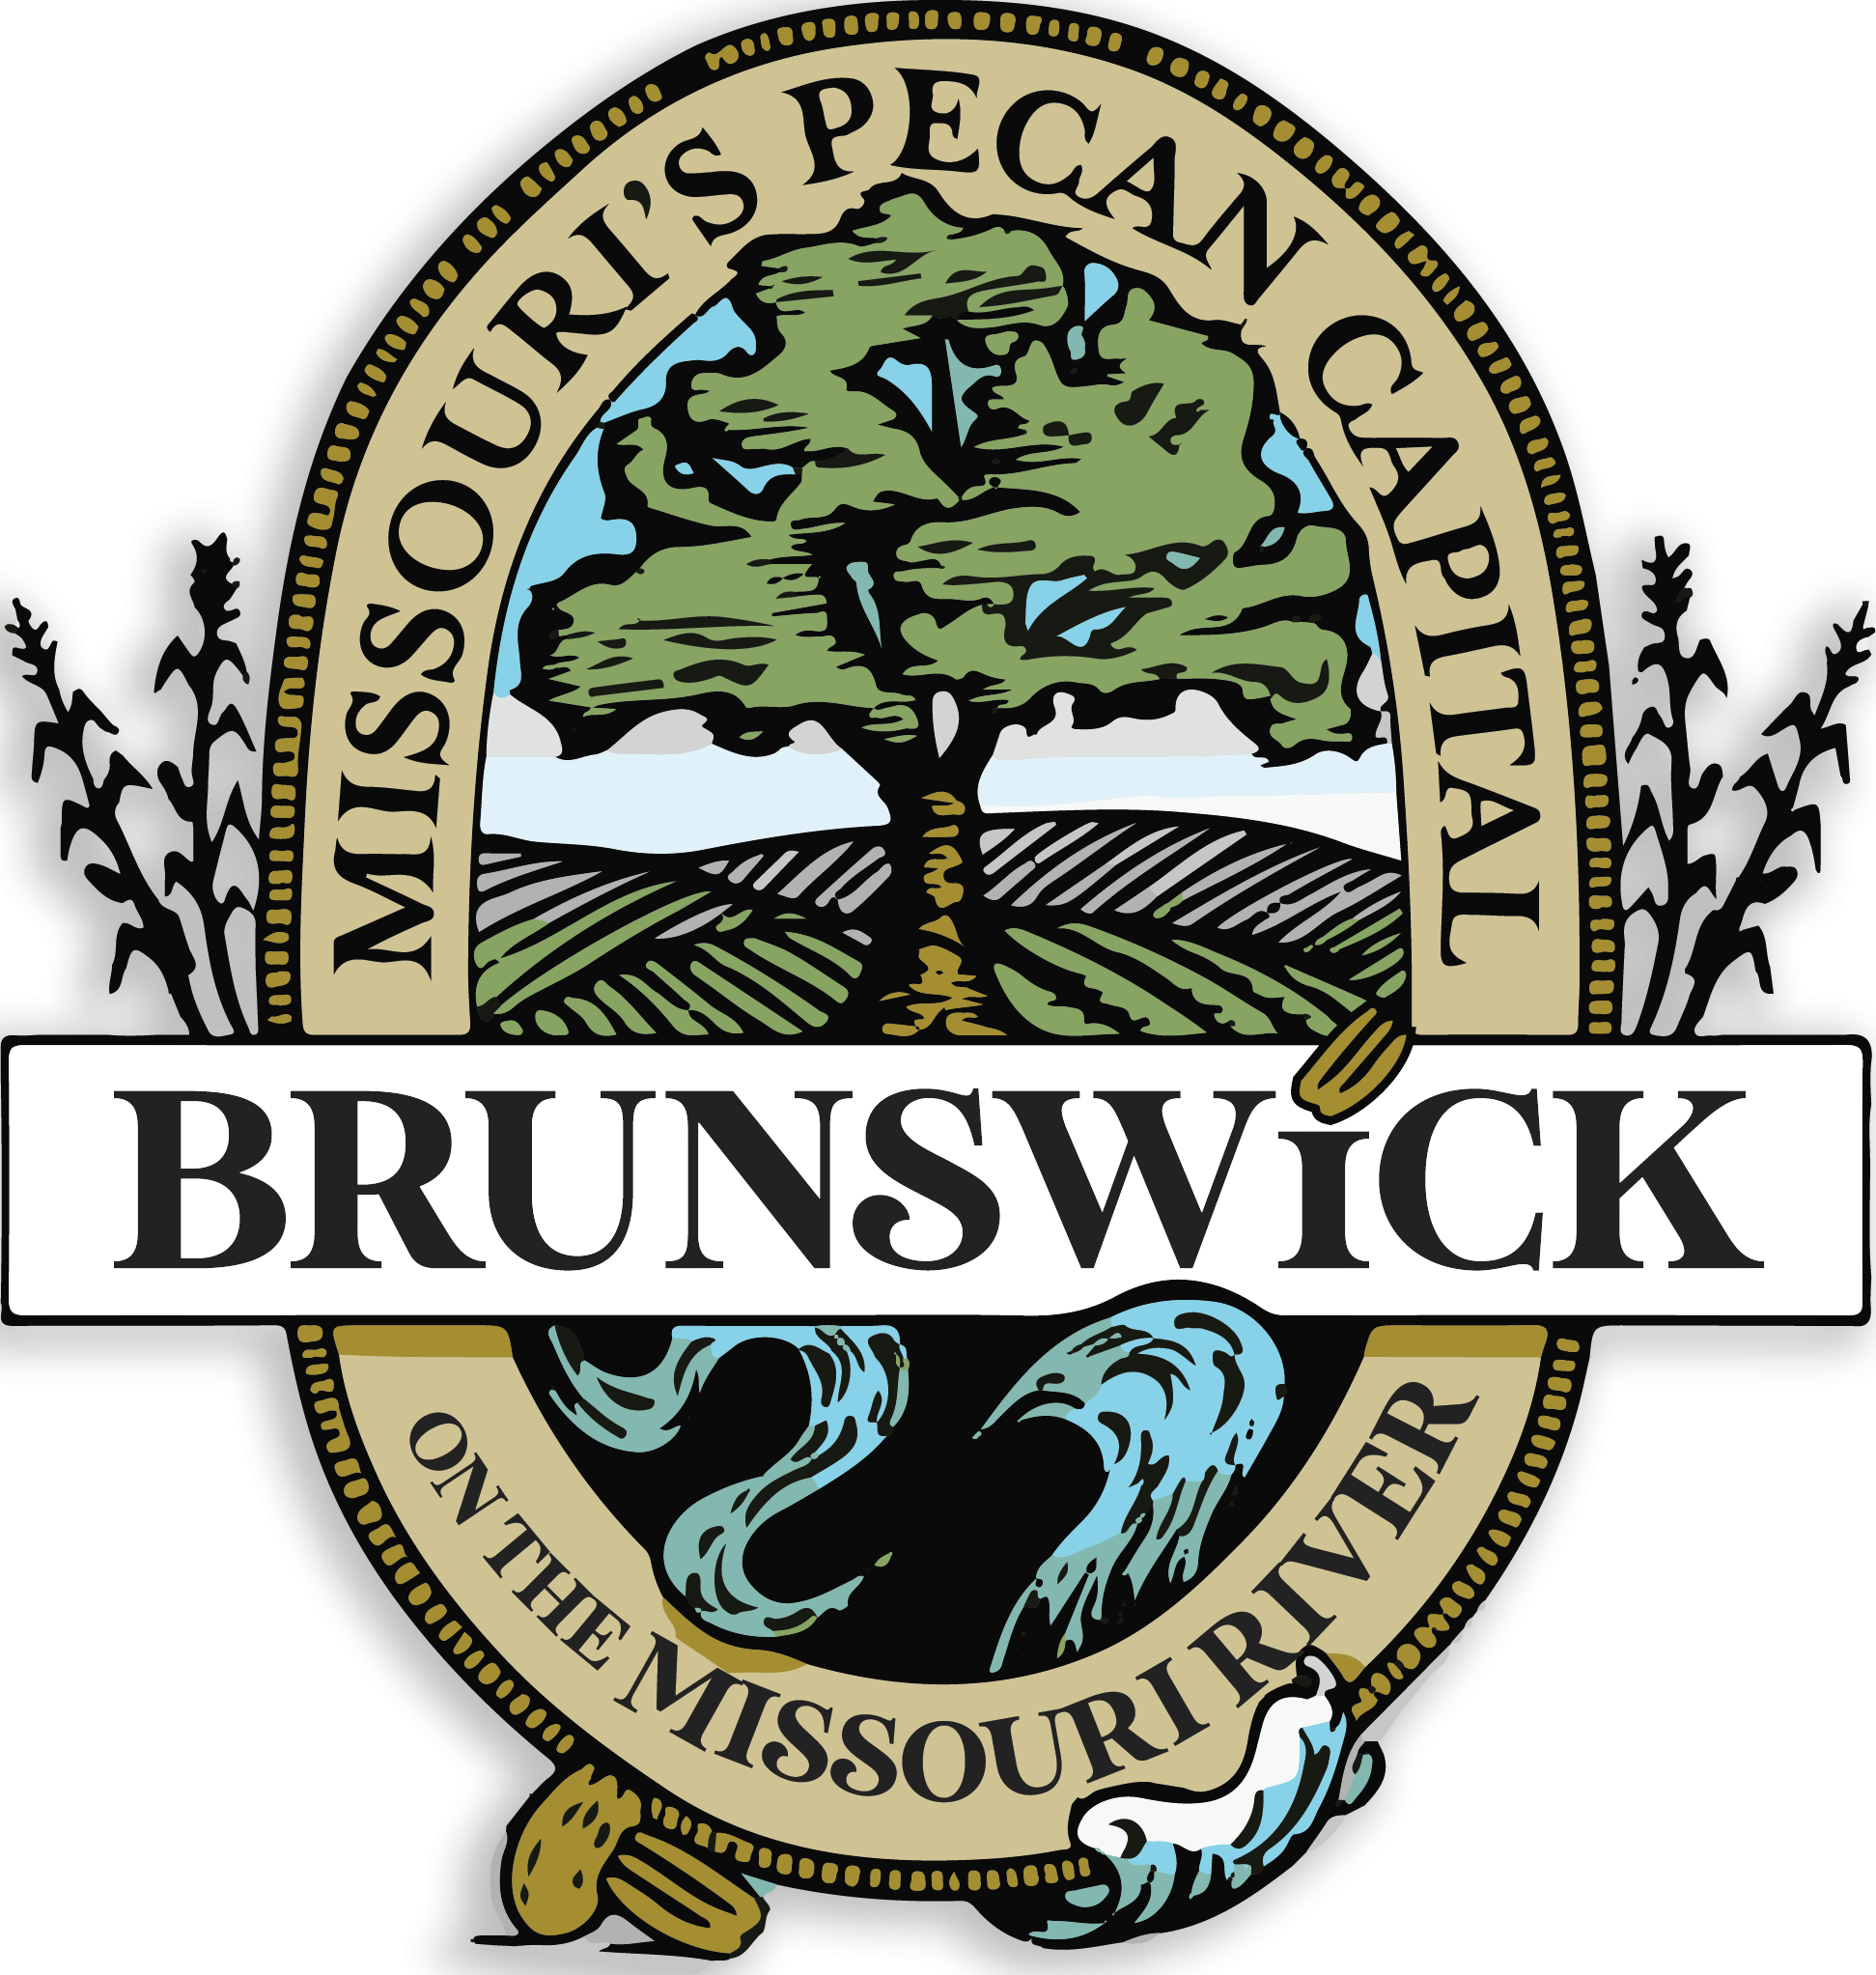 City of Brunswick